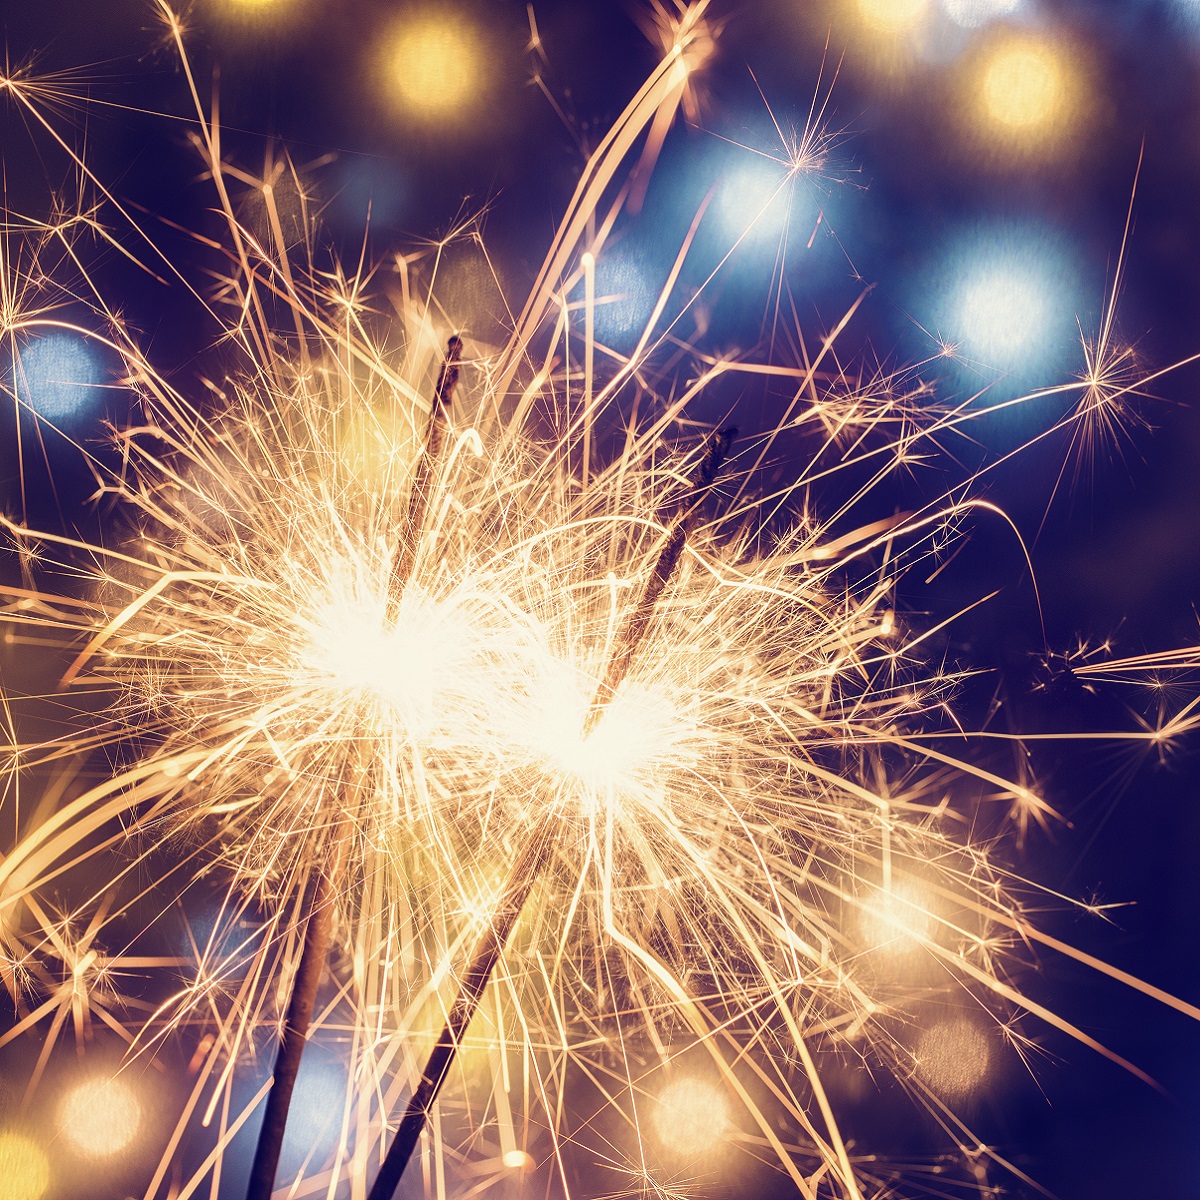 Two sparklers emit bright, celebratory sparks